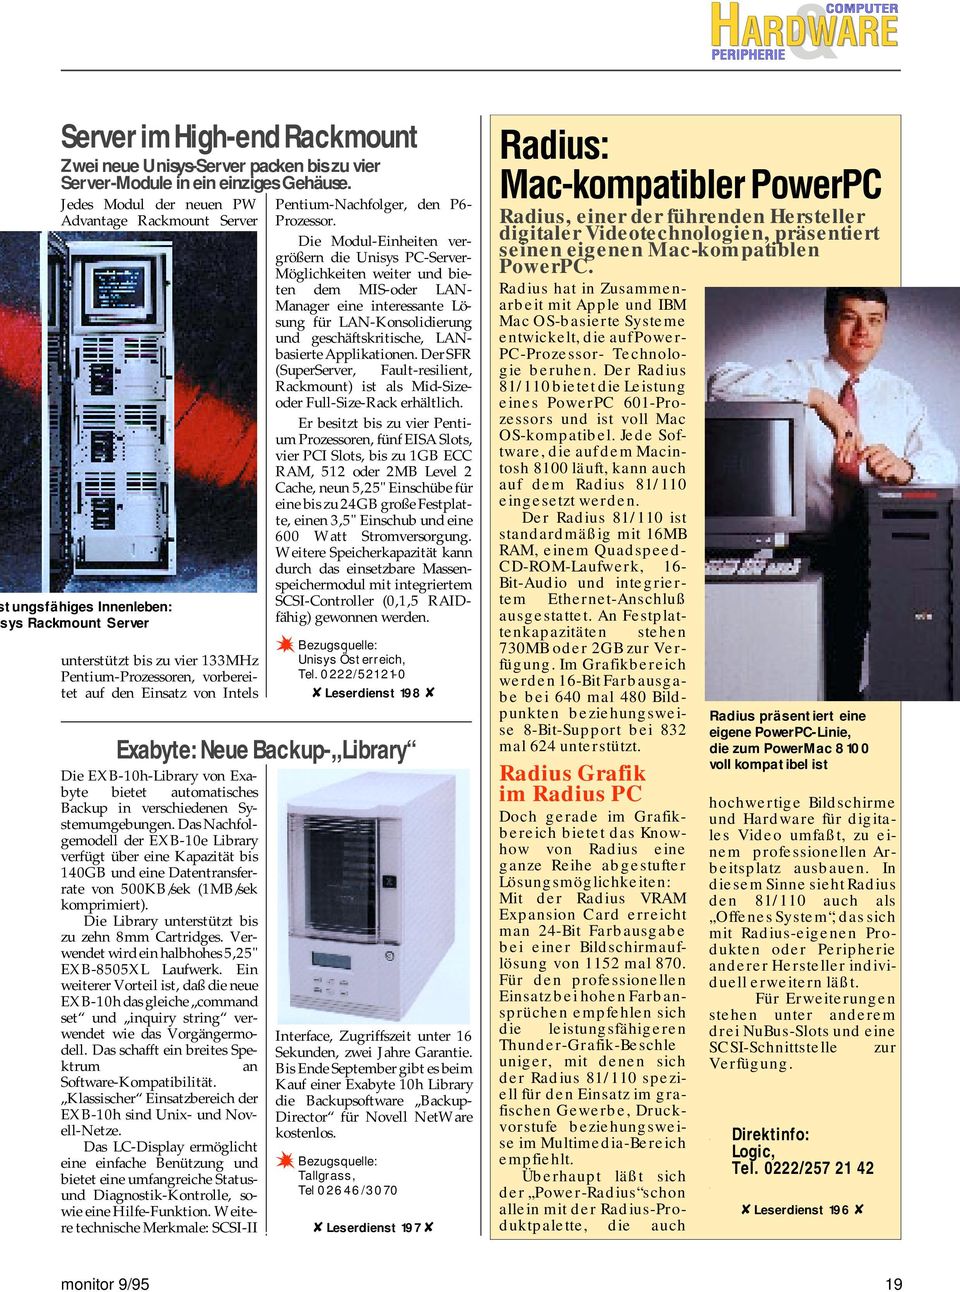 Pentium-Nachfolger, den P6- Prozessor.